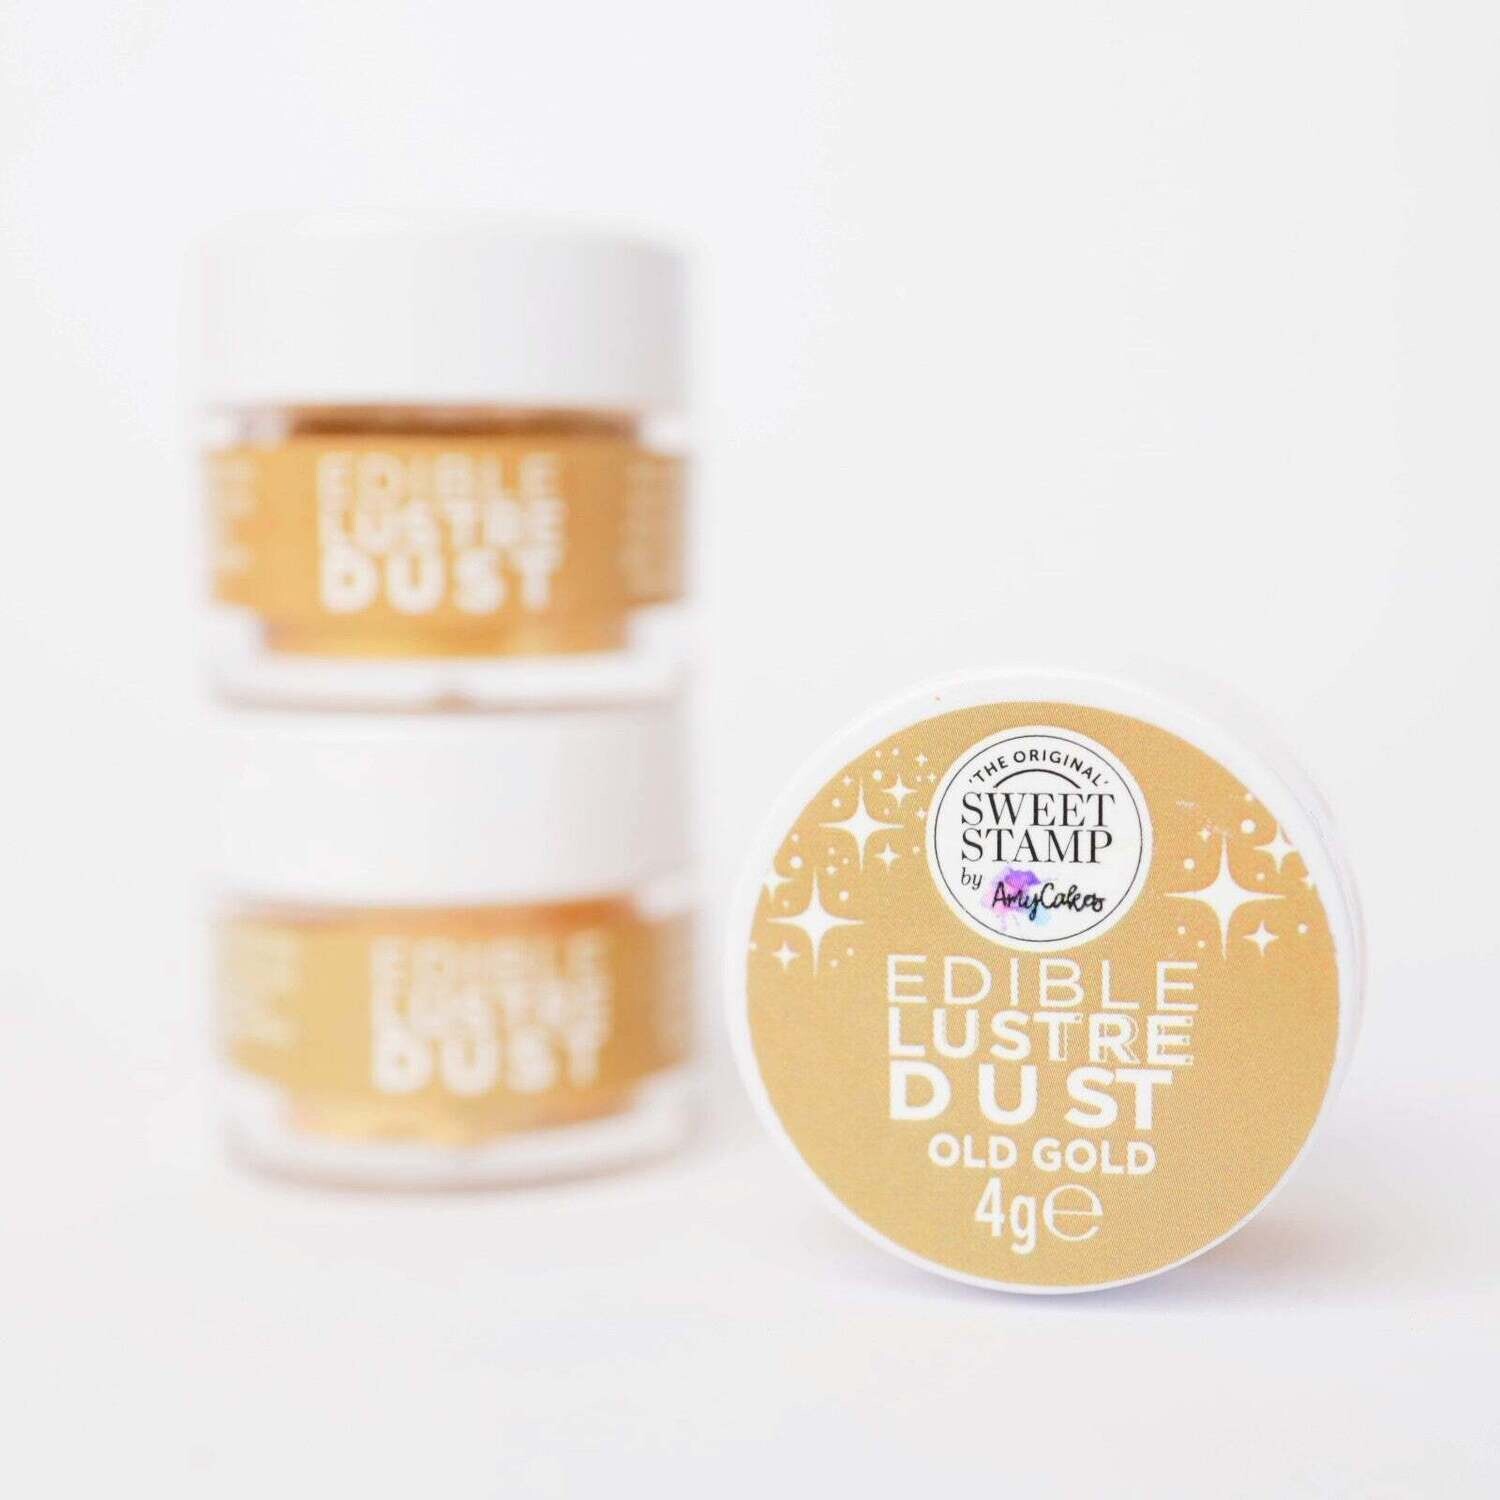 Sweet Stamp Edible Lustre Dust -OLD GOLD - Βρώσιμη σκόνη γυαλιστερή Χρυσή 4g